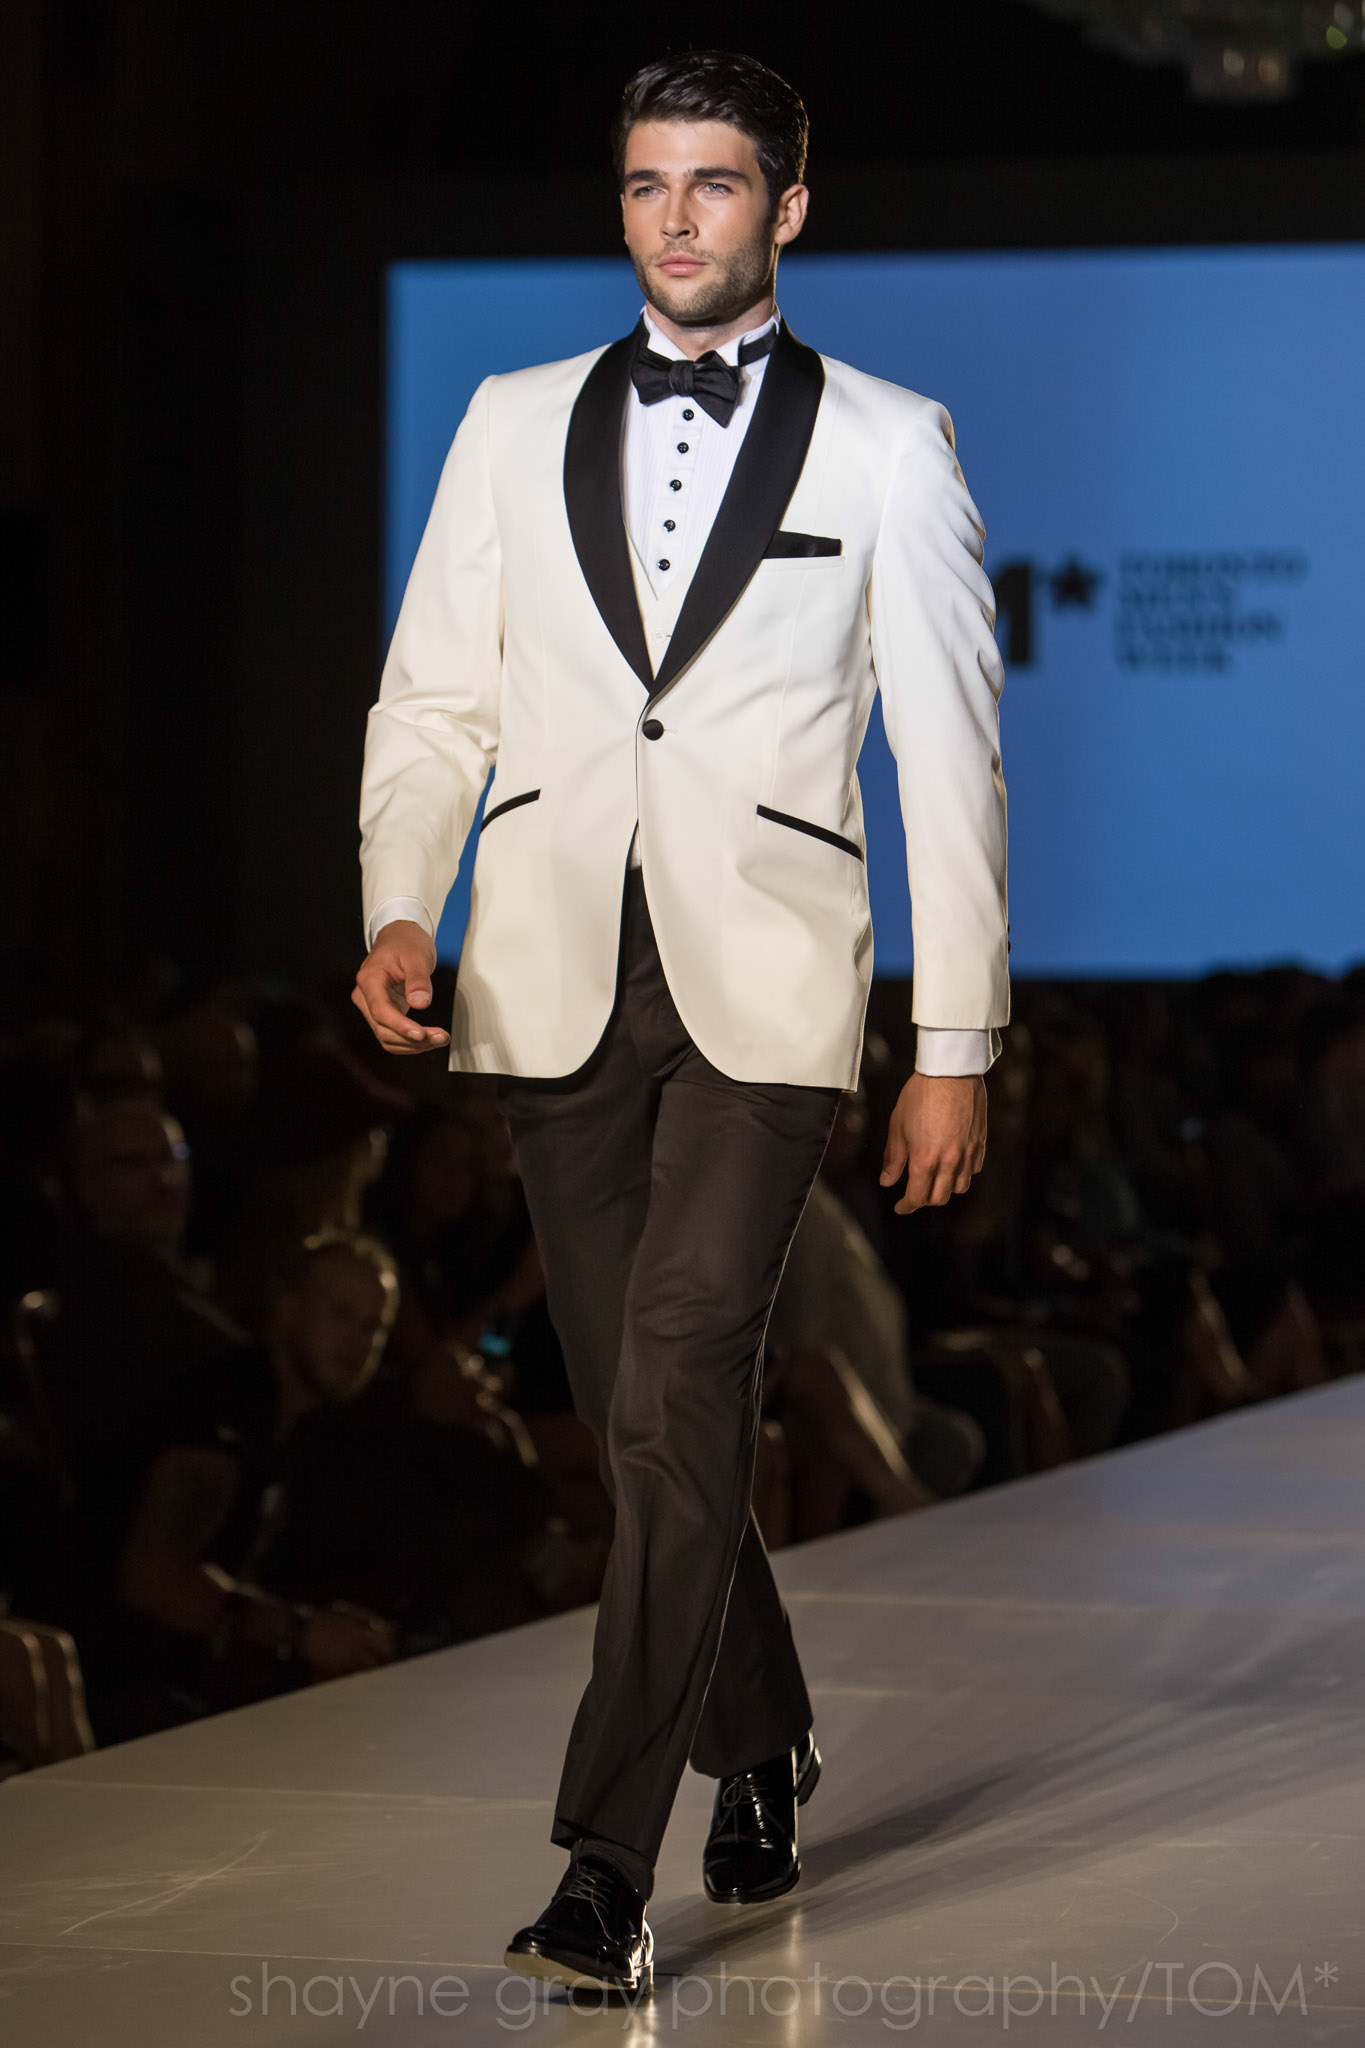 Shayne-Gray-Toronto-men's-fashion_week-TOM-christopher-bates-7396.jpg